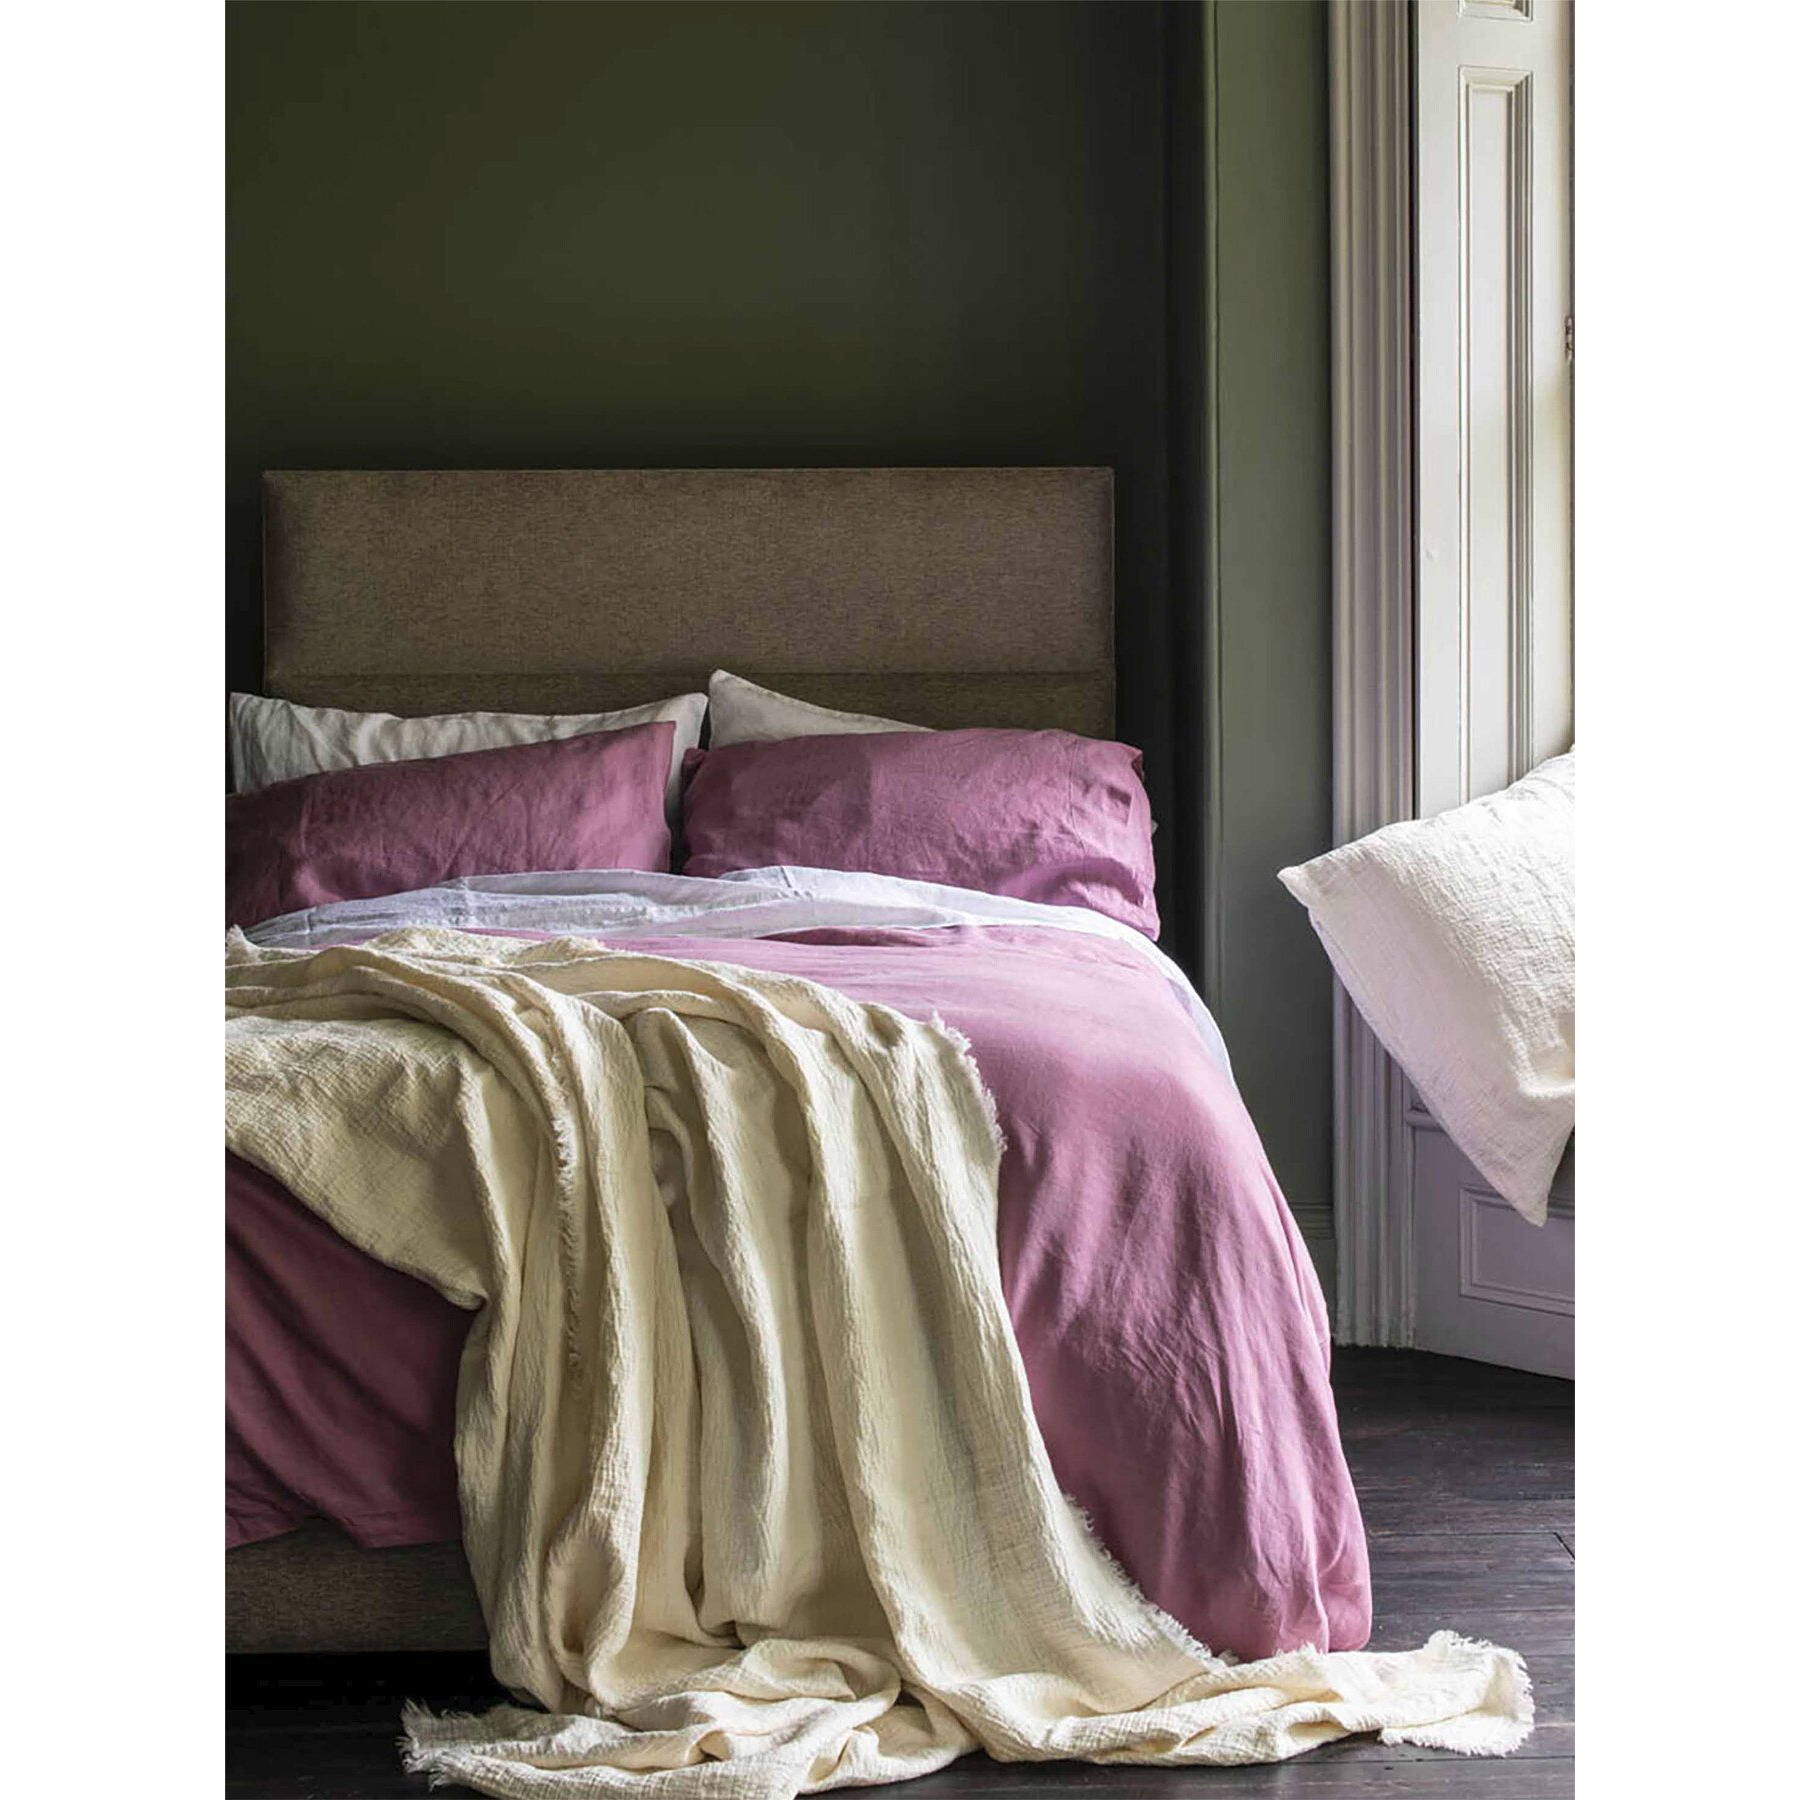 Piglet in Bed Linen Flat Sheet - Size King Pink - image 1